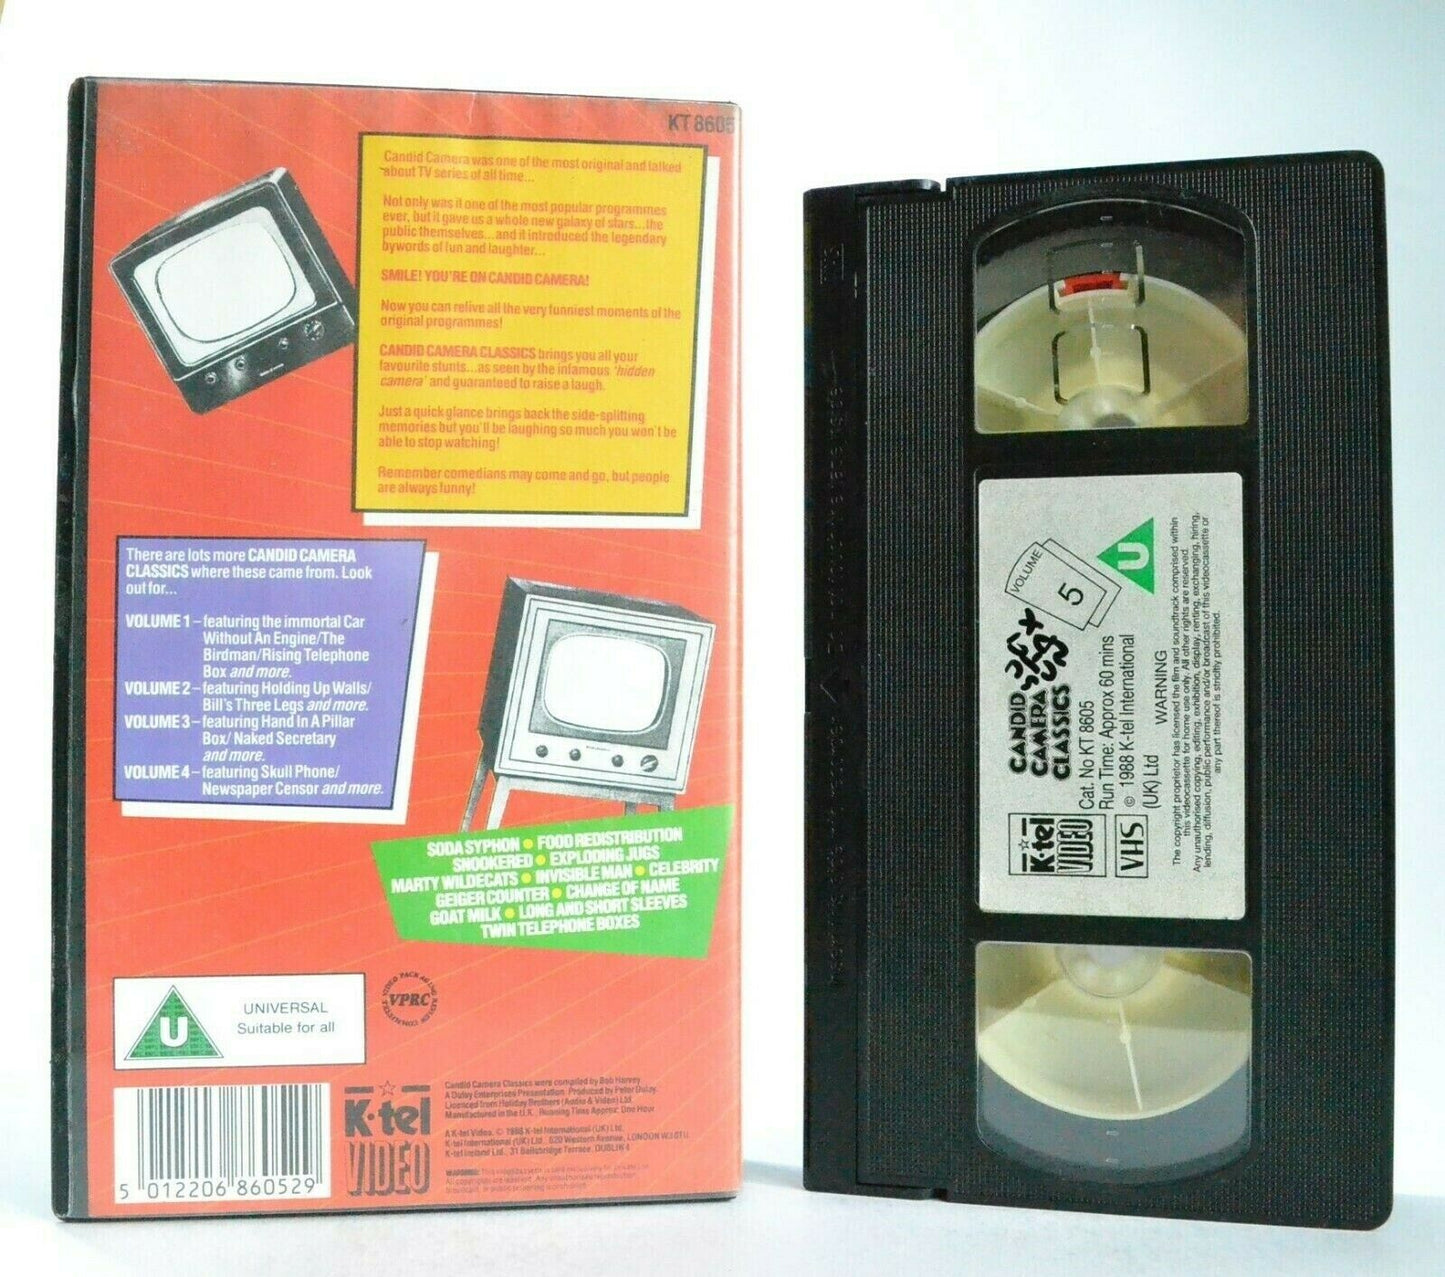 Candid Camera Classics: Volume 5 - Hilarious Viewing - TV Show - Pal VHS-